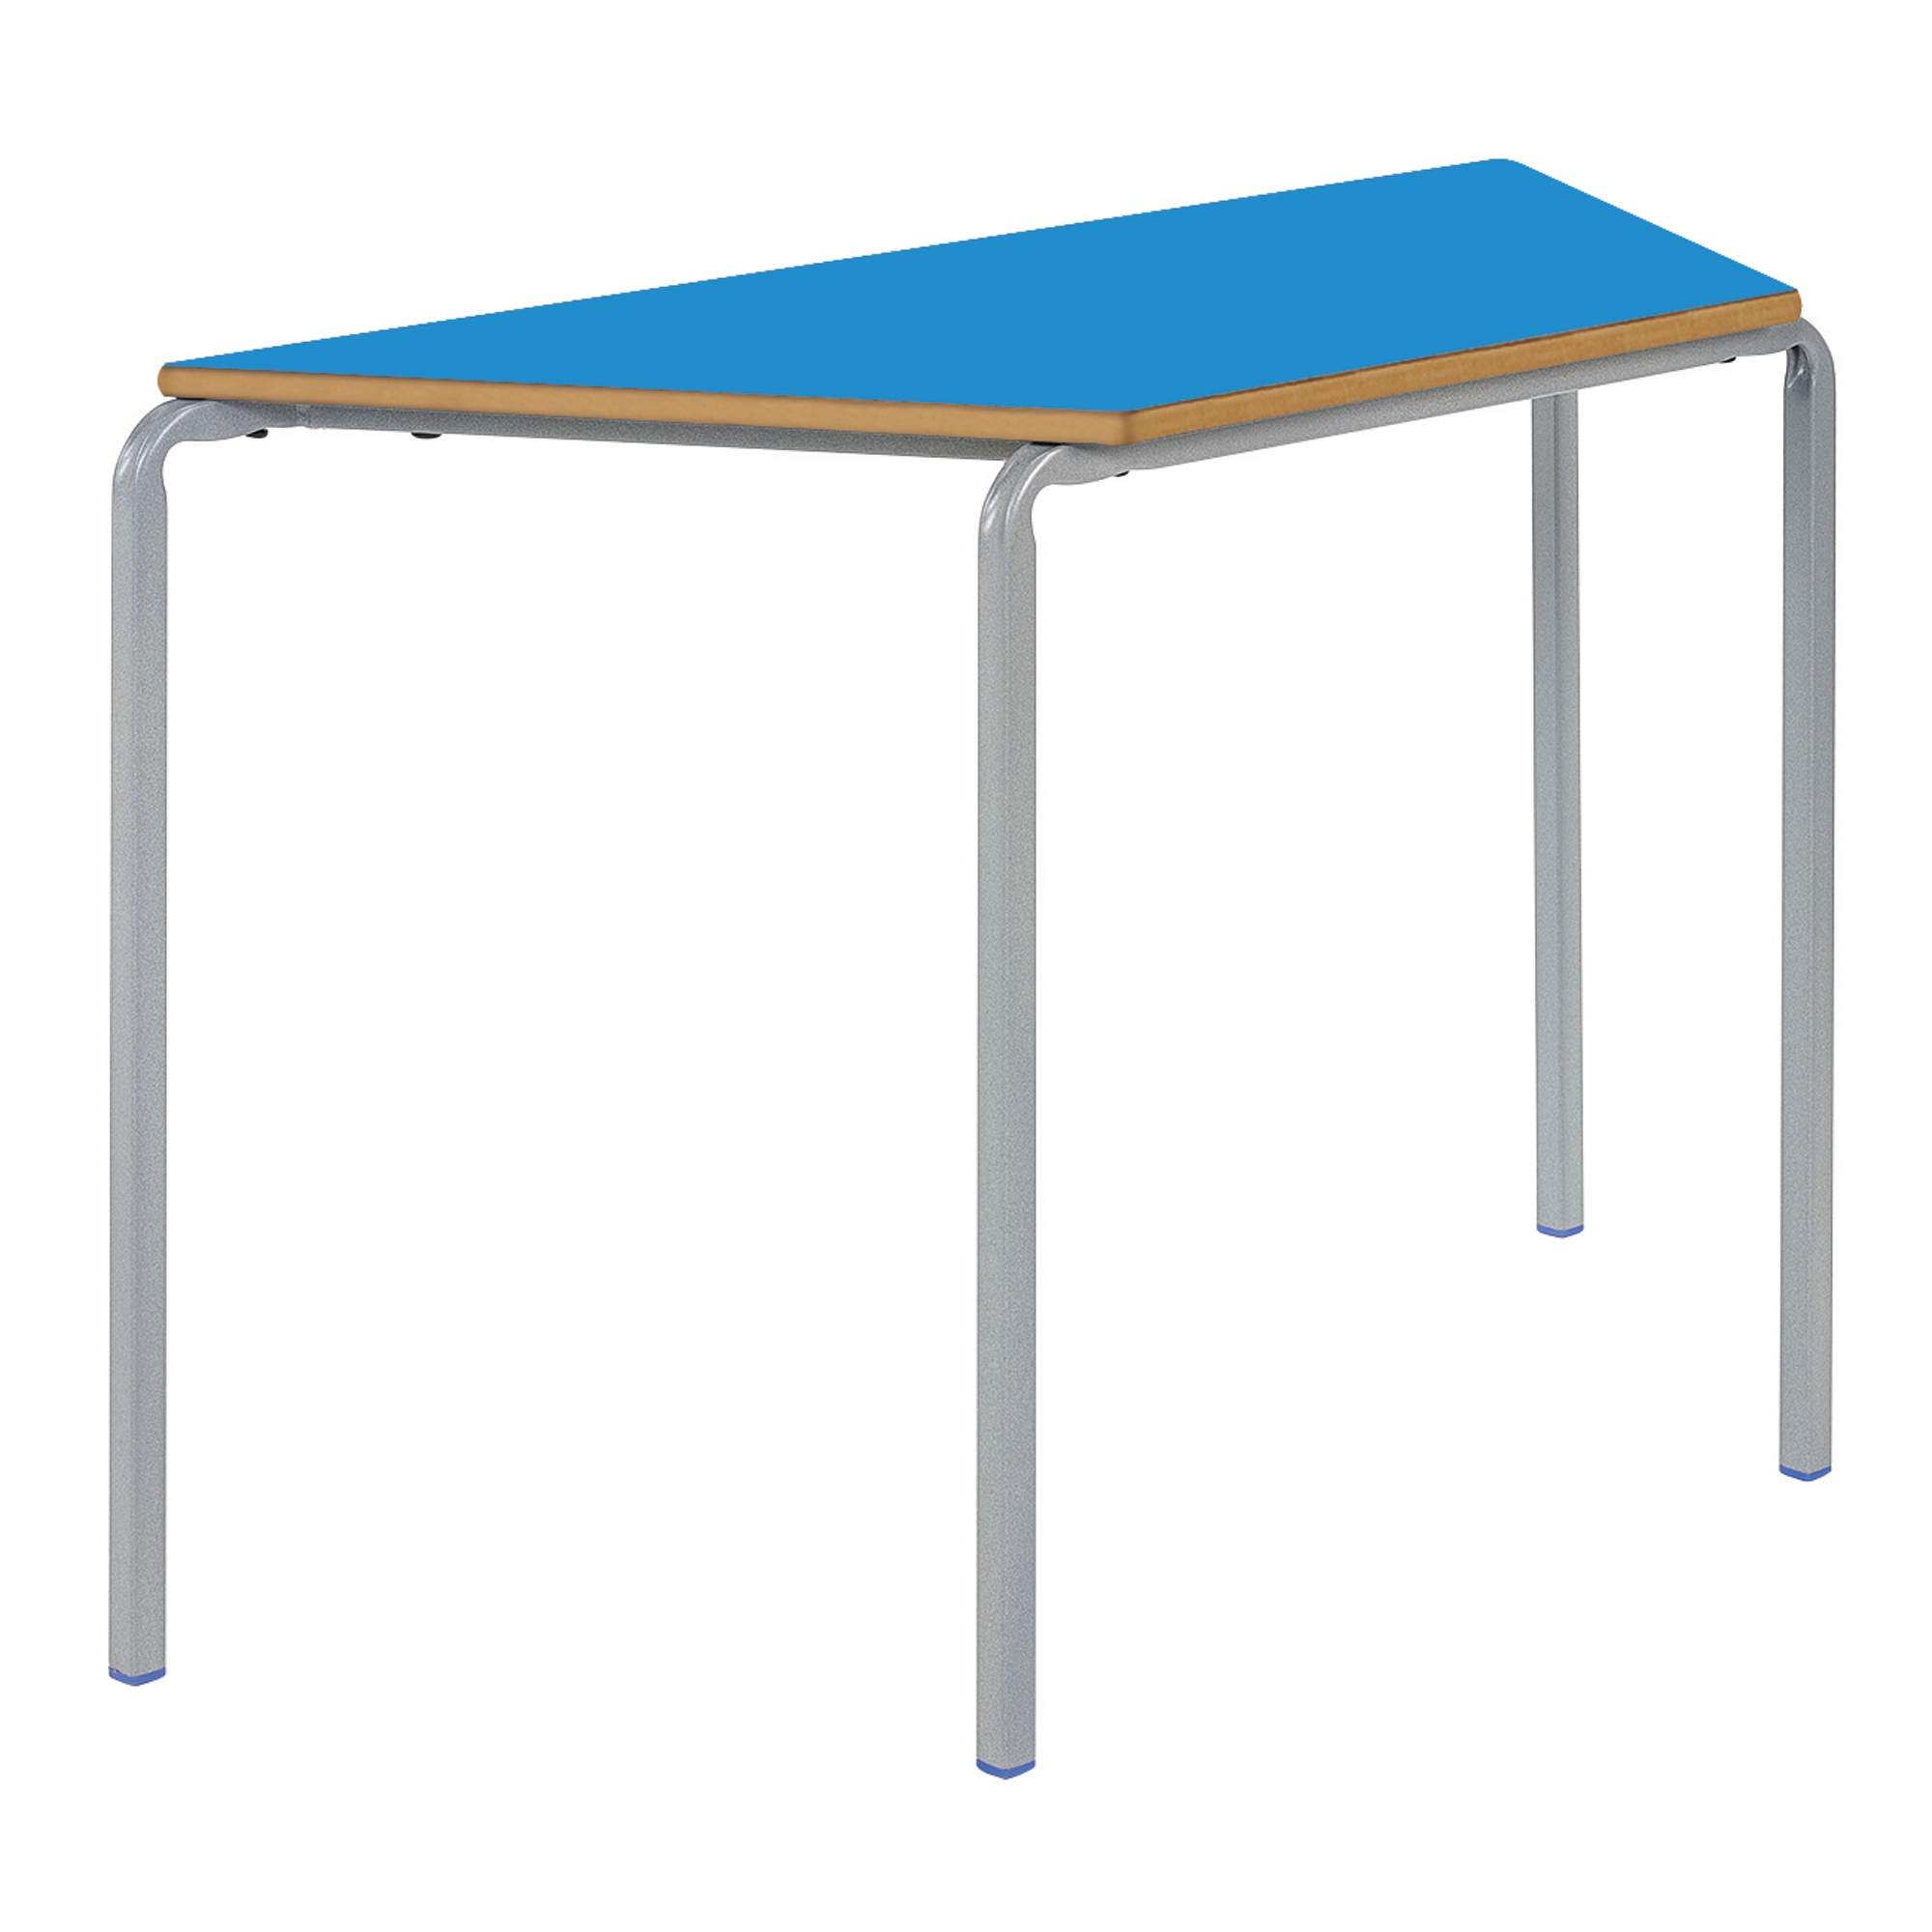 Classmates Trapezoidal Crushed Bent Classroom Table - 1100 x 550 x 760mm - Blue